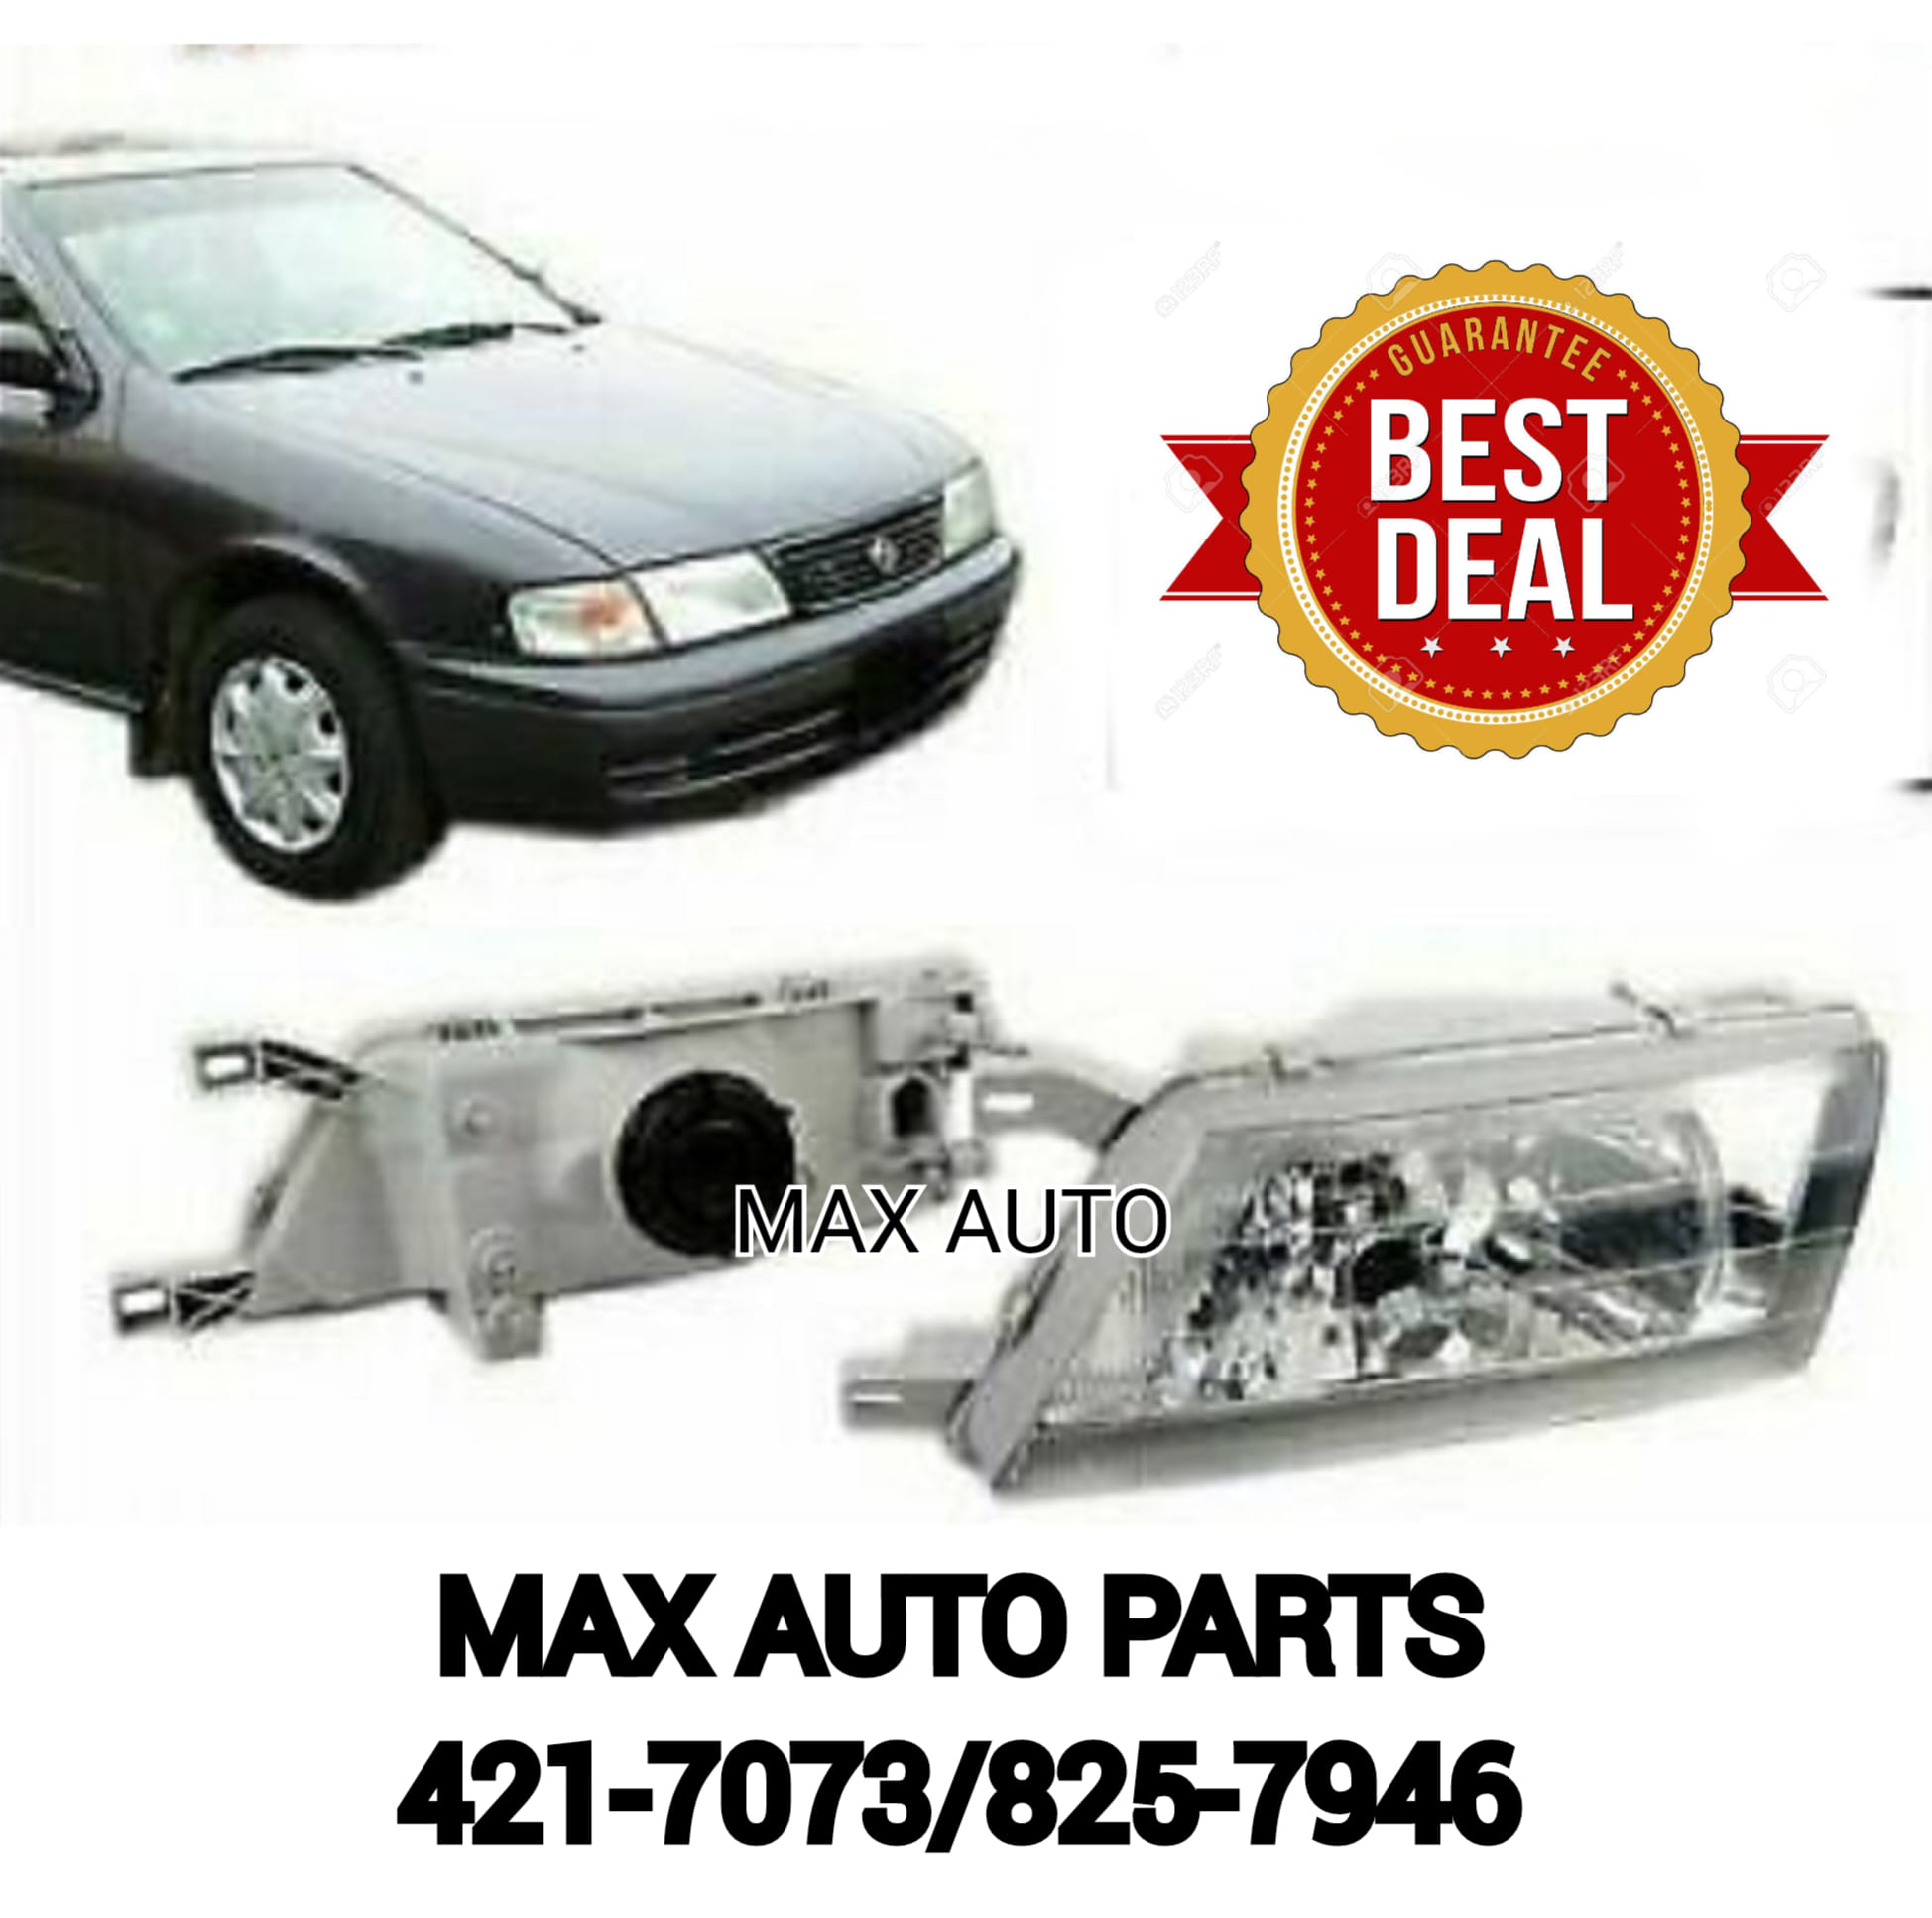 Max Auto Parts - Auto Parts